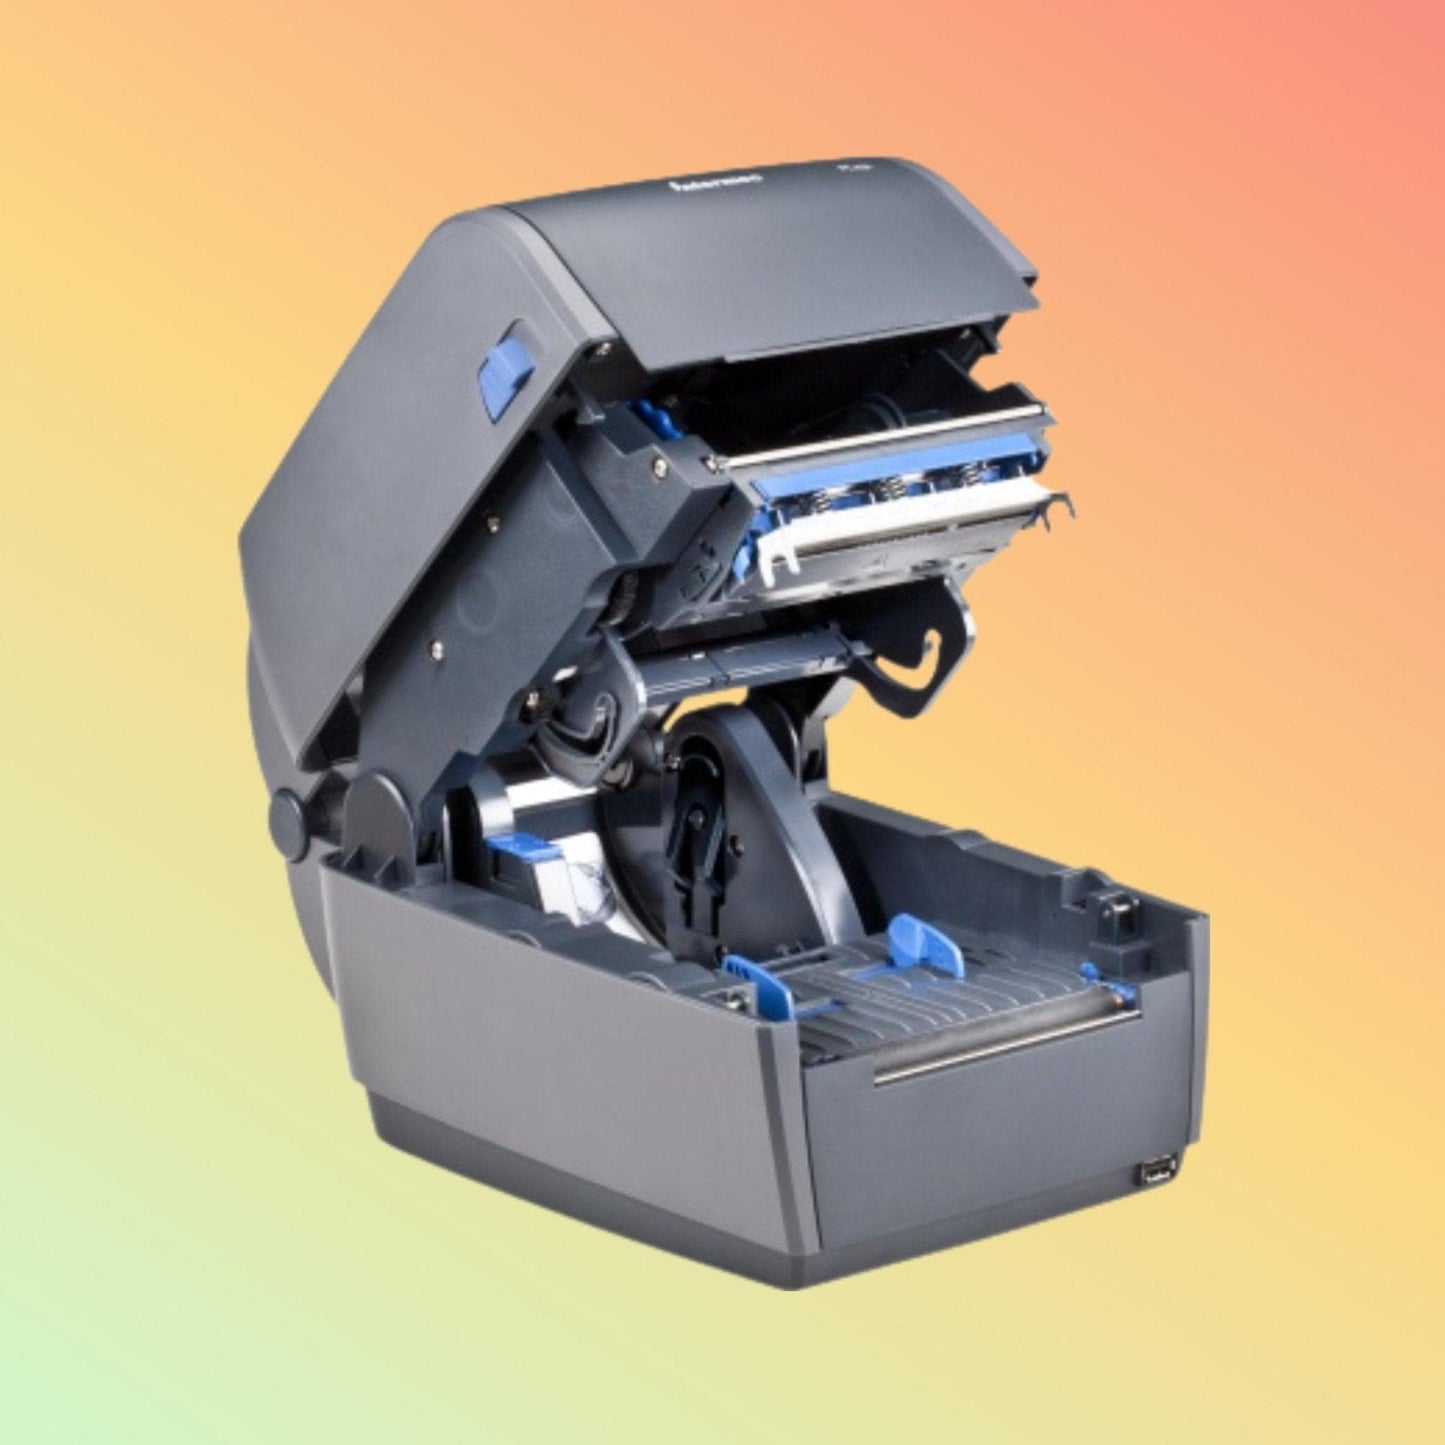 Barcode Printer - Honeywell PC43T - Neotech